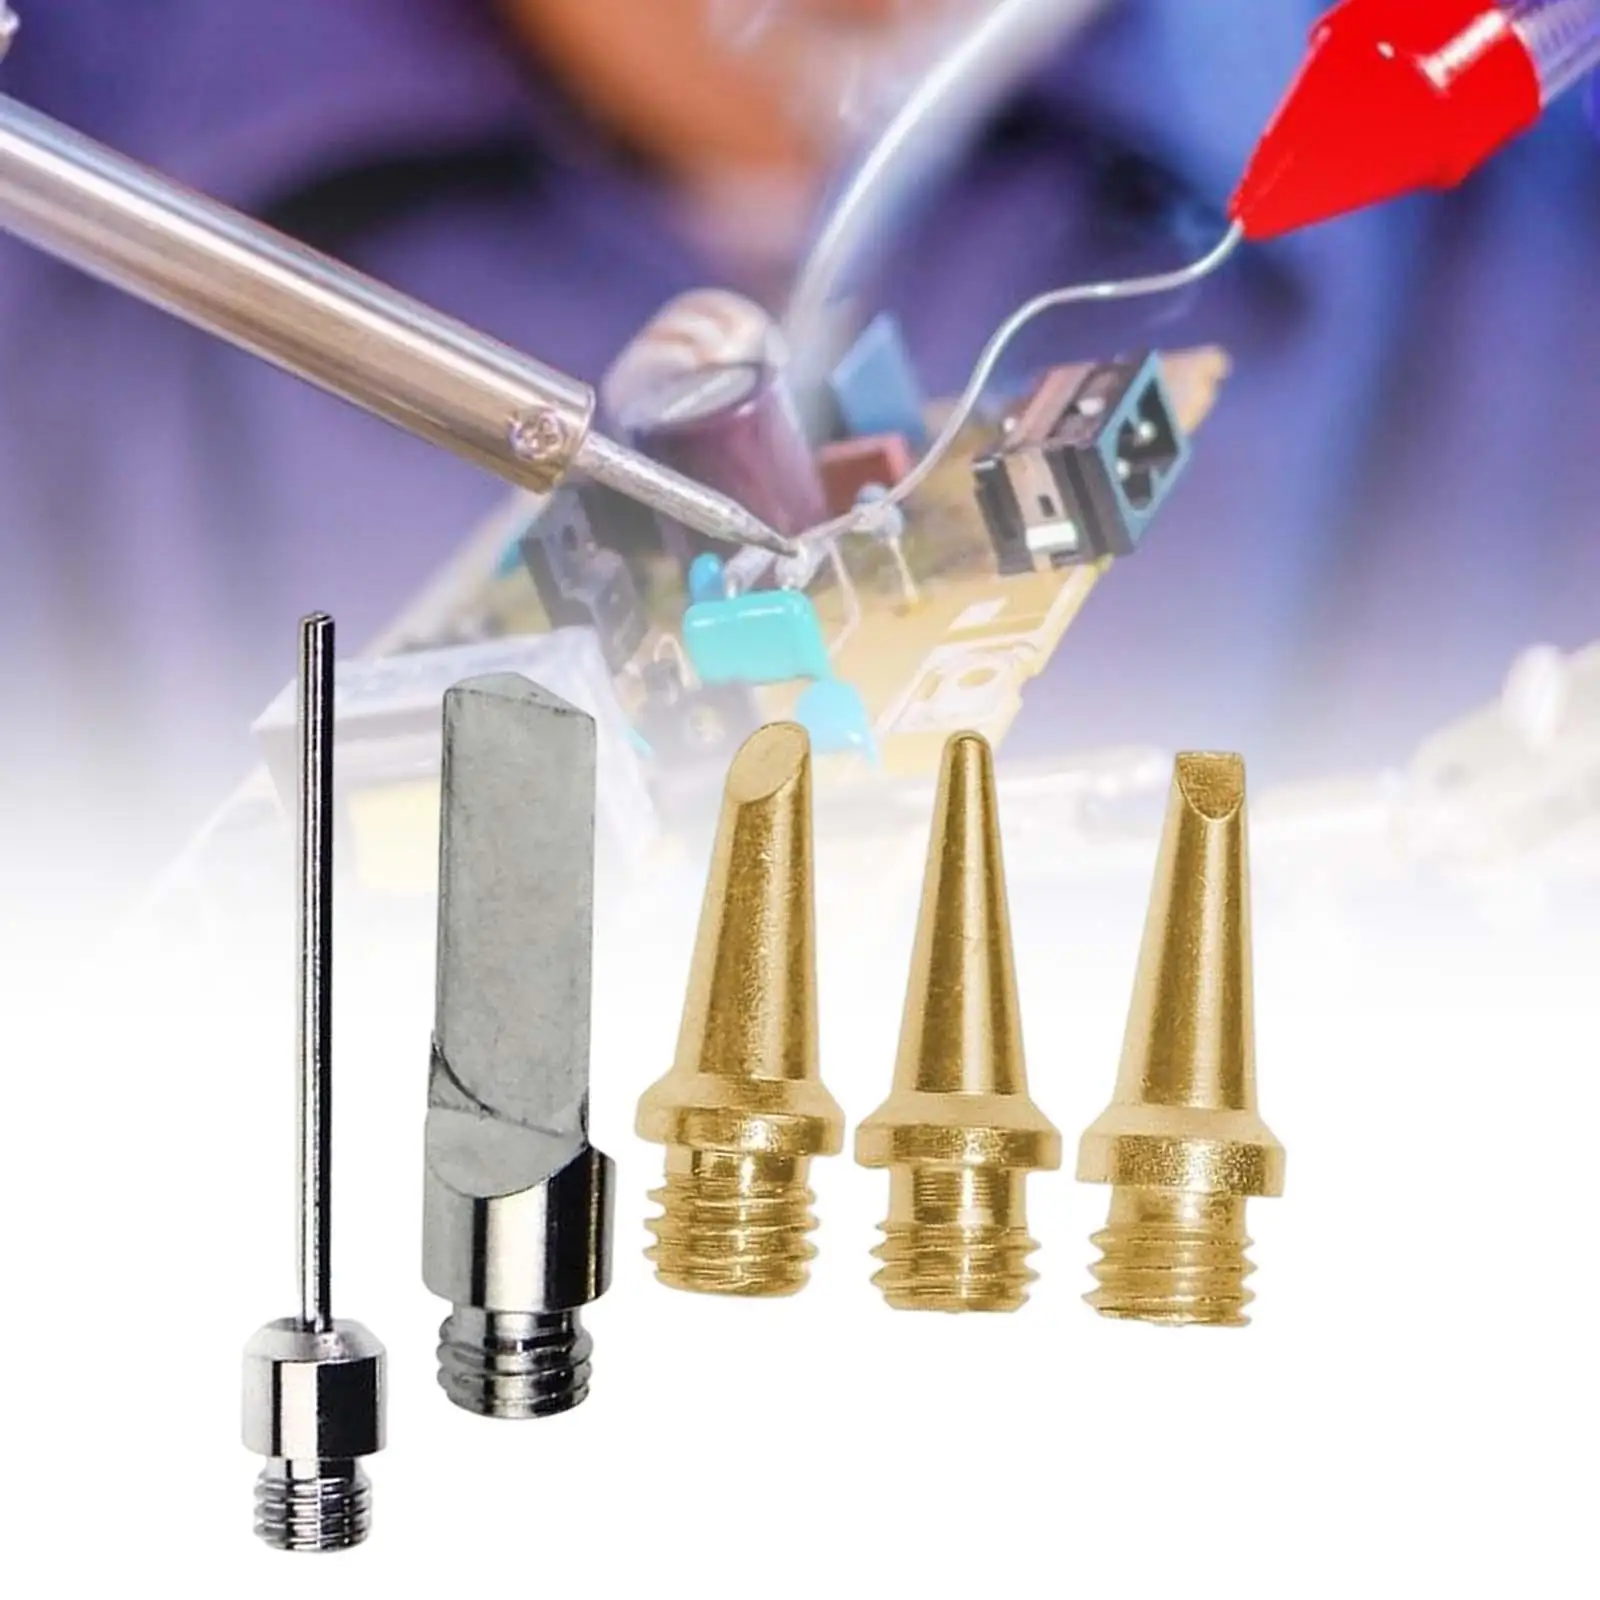 5 Pieces Metal Gas Soldering Iron Welding  Kit Replacement Accessories